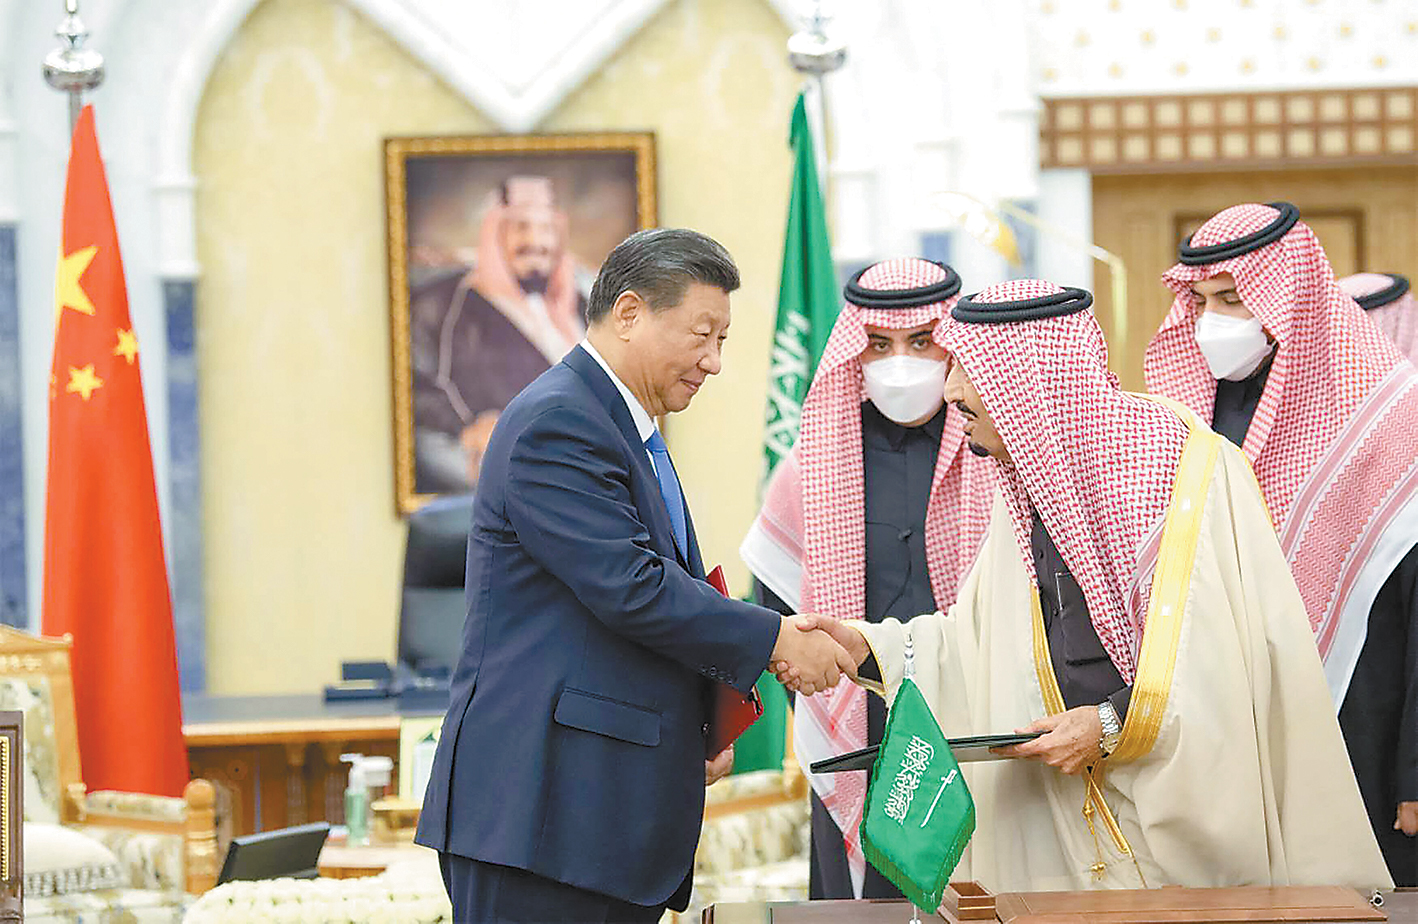 Chinese President Xi Jinping meets with King Salman bin Abdulaziz Al Saud of Saudi Arabia at Riyadh’s al-Yamamah Palace in Saudi Arabia on December 8, 2022. Photo: Xinhua